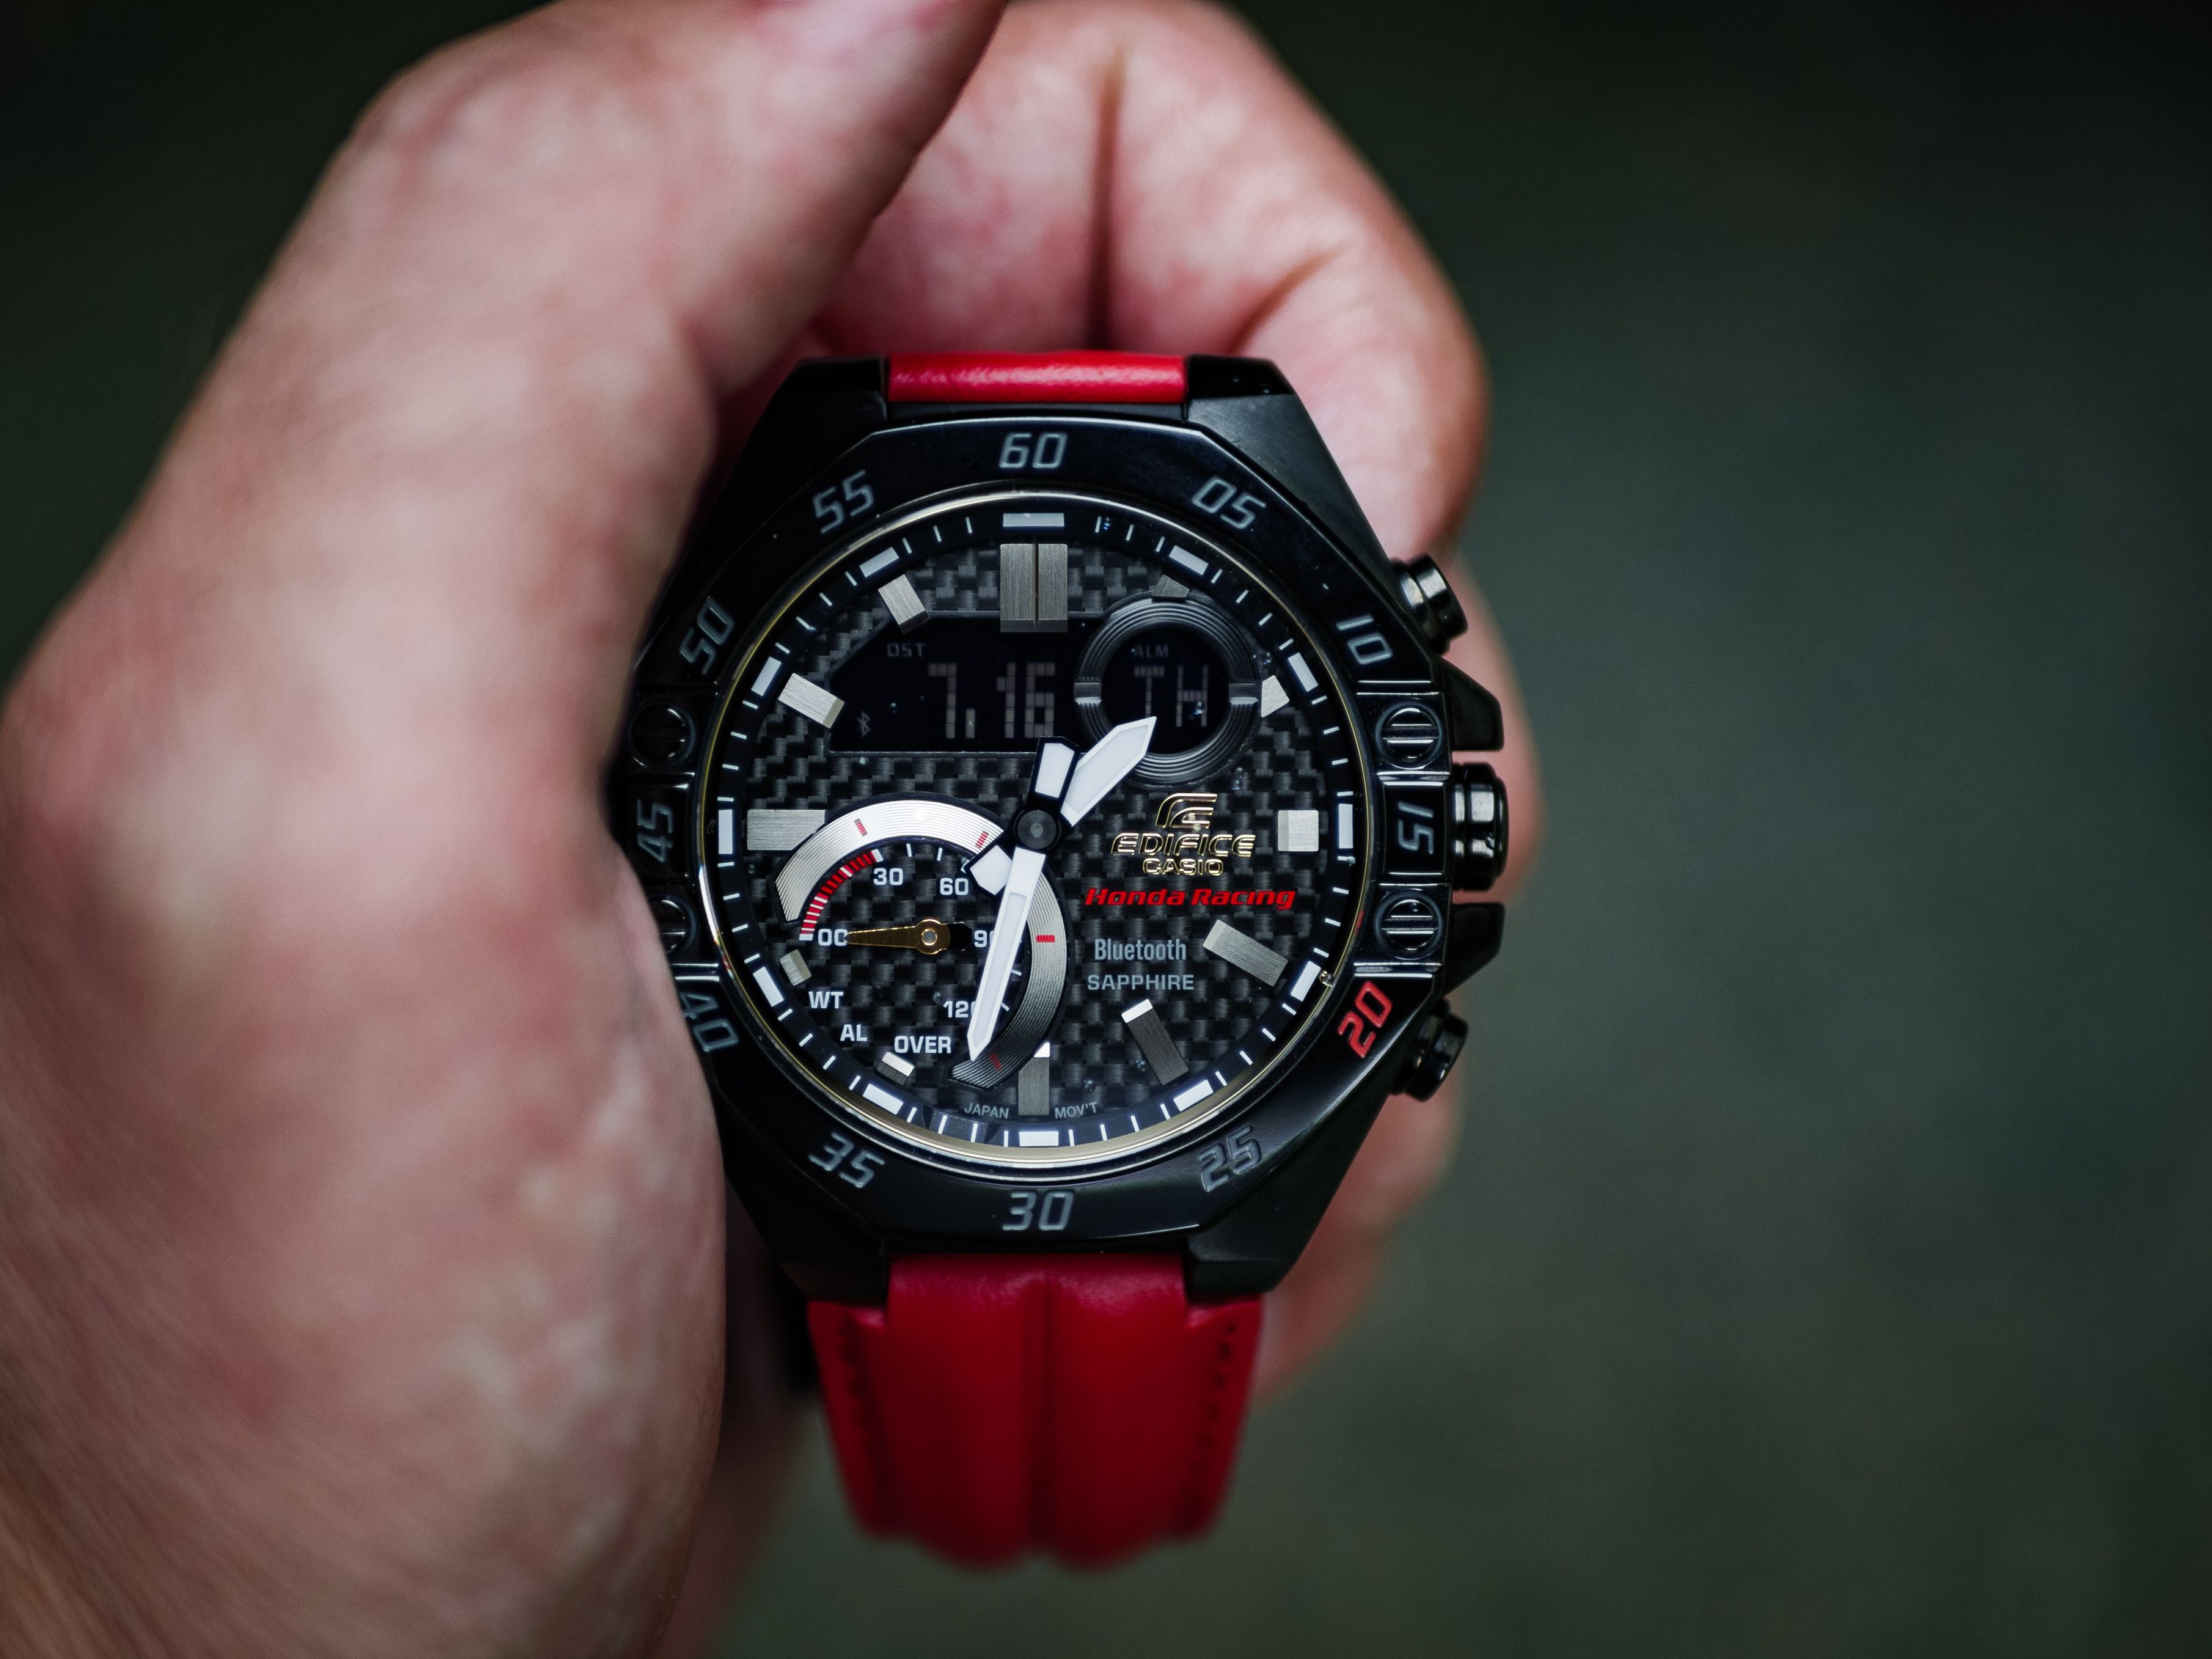 Mugen celebrates 50th anniversary with Casio watch